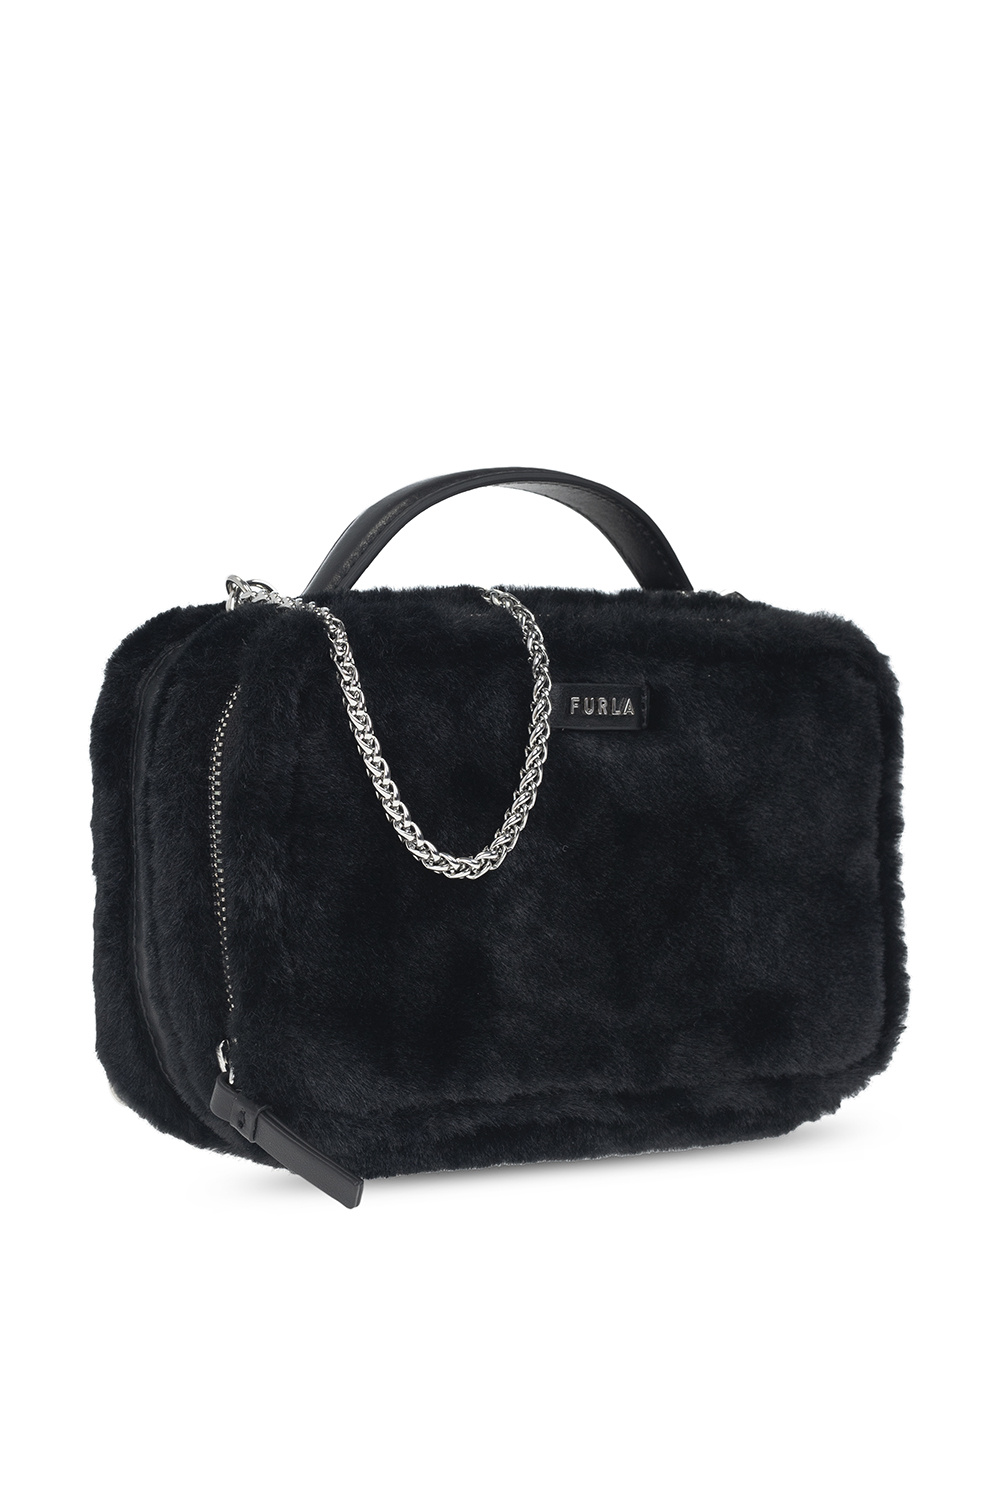 Furla ‘Babylon Mini’ shoulder bag